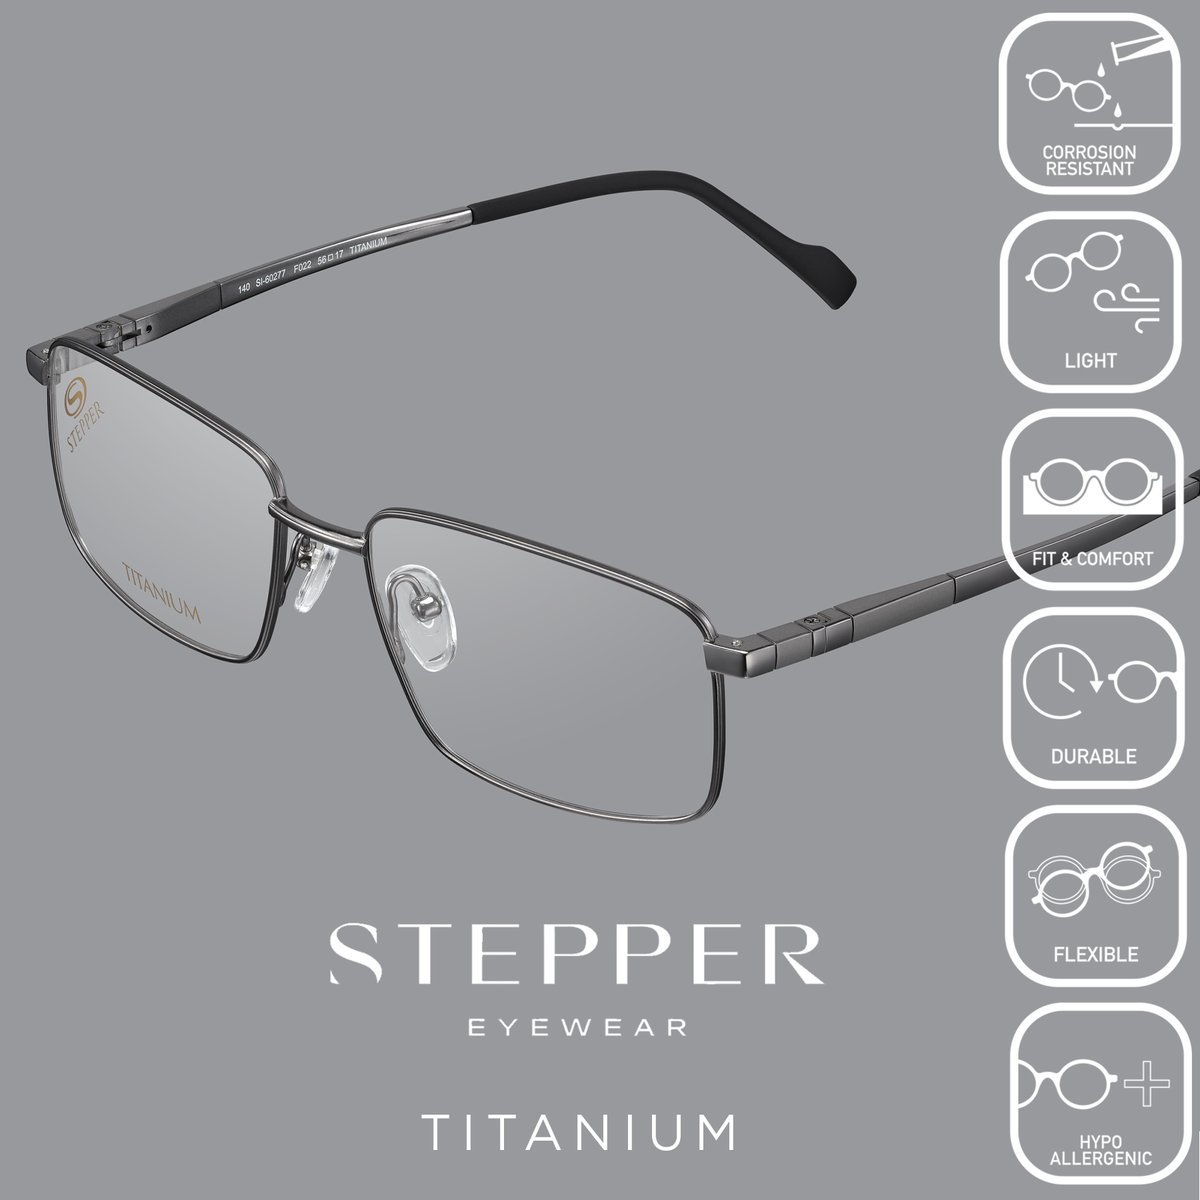 Titanium: the pinnacle material of eyewear design 
#steppereyewear 
#titanium  
#lightweight 
#flexible
#durable
#corrosionresistant
#allergyfree
#fitandcomfort